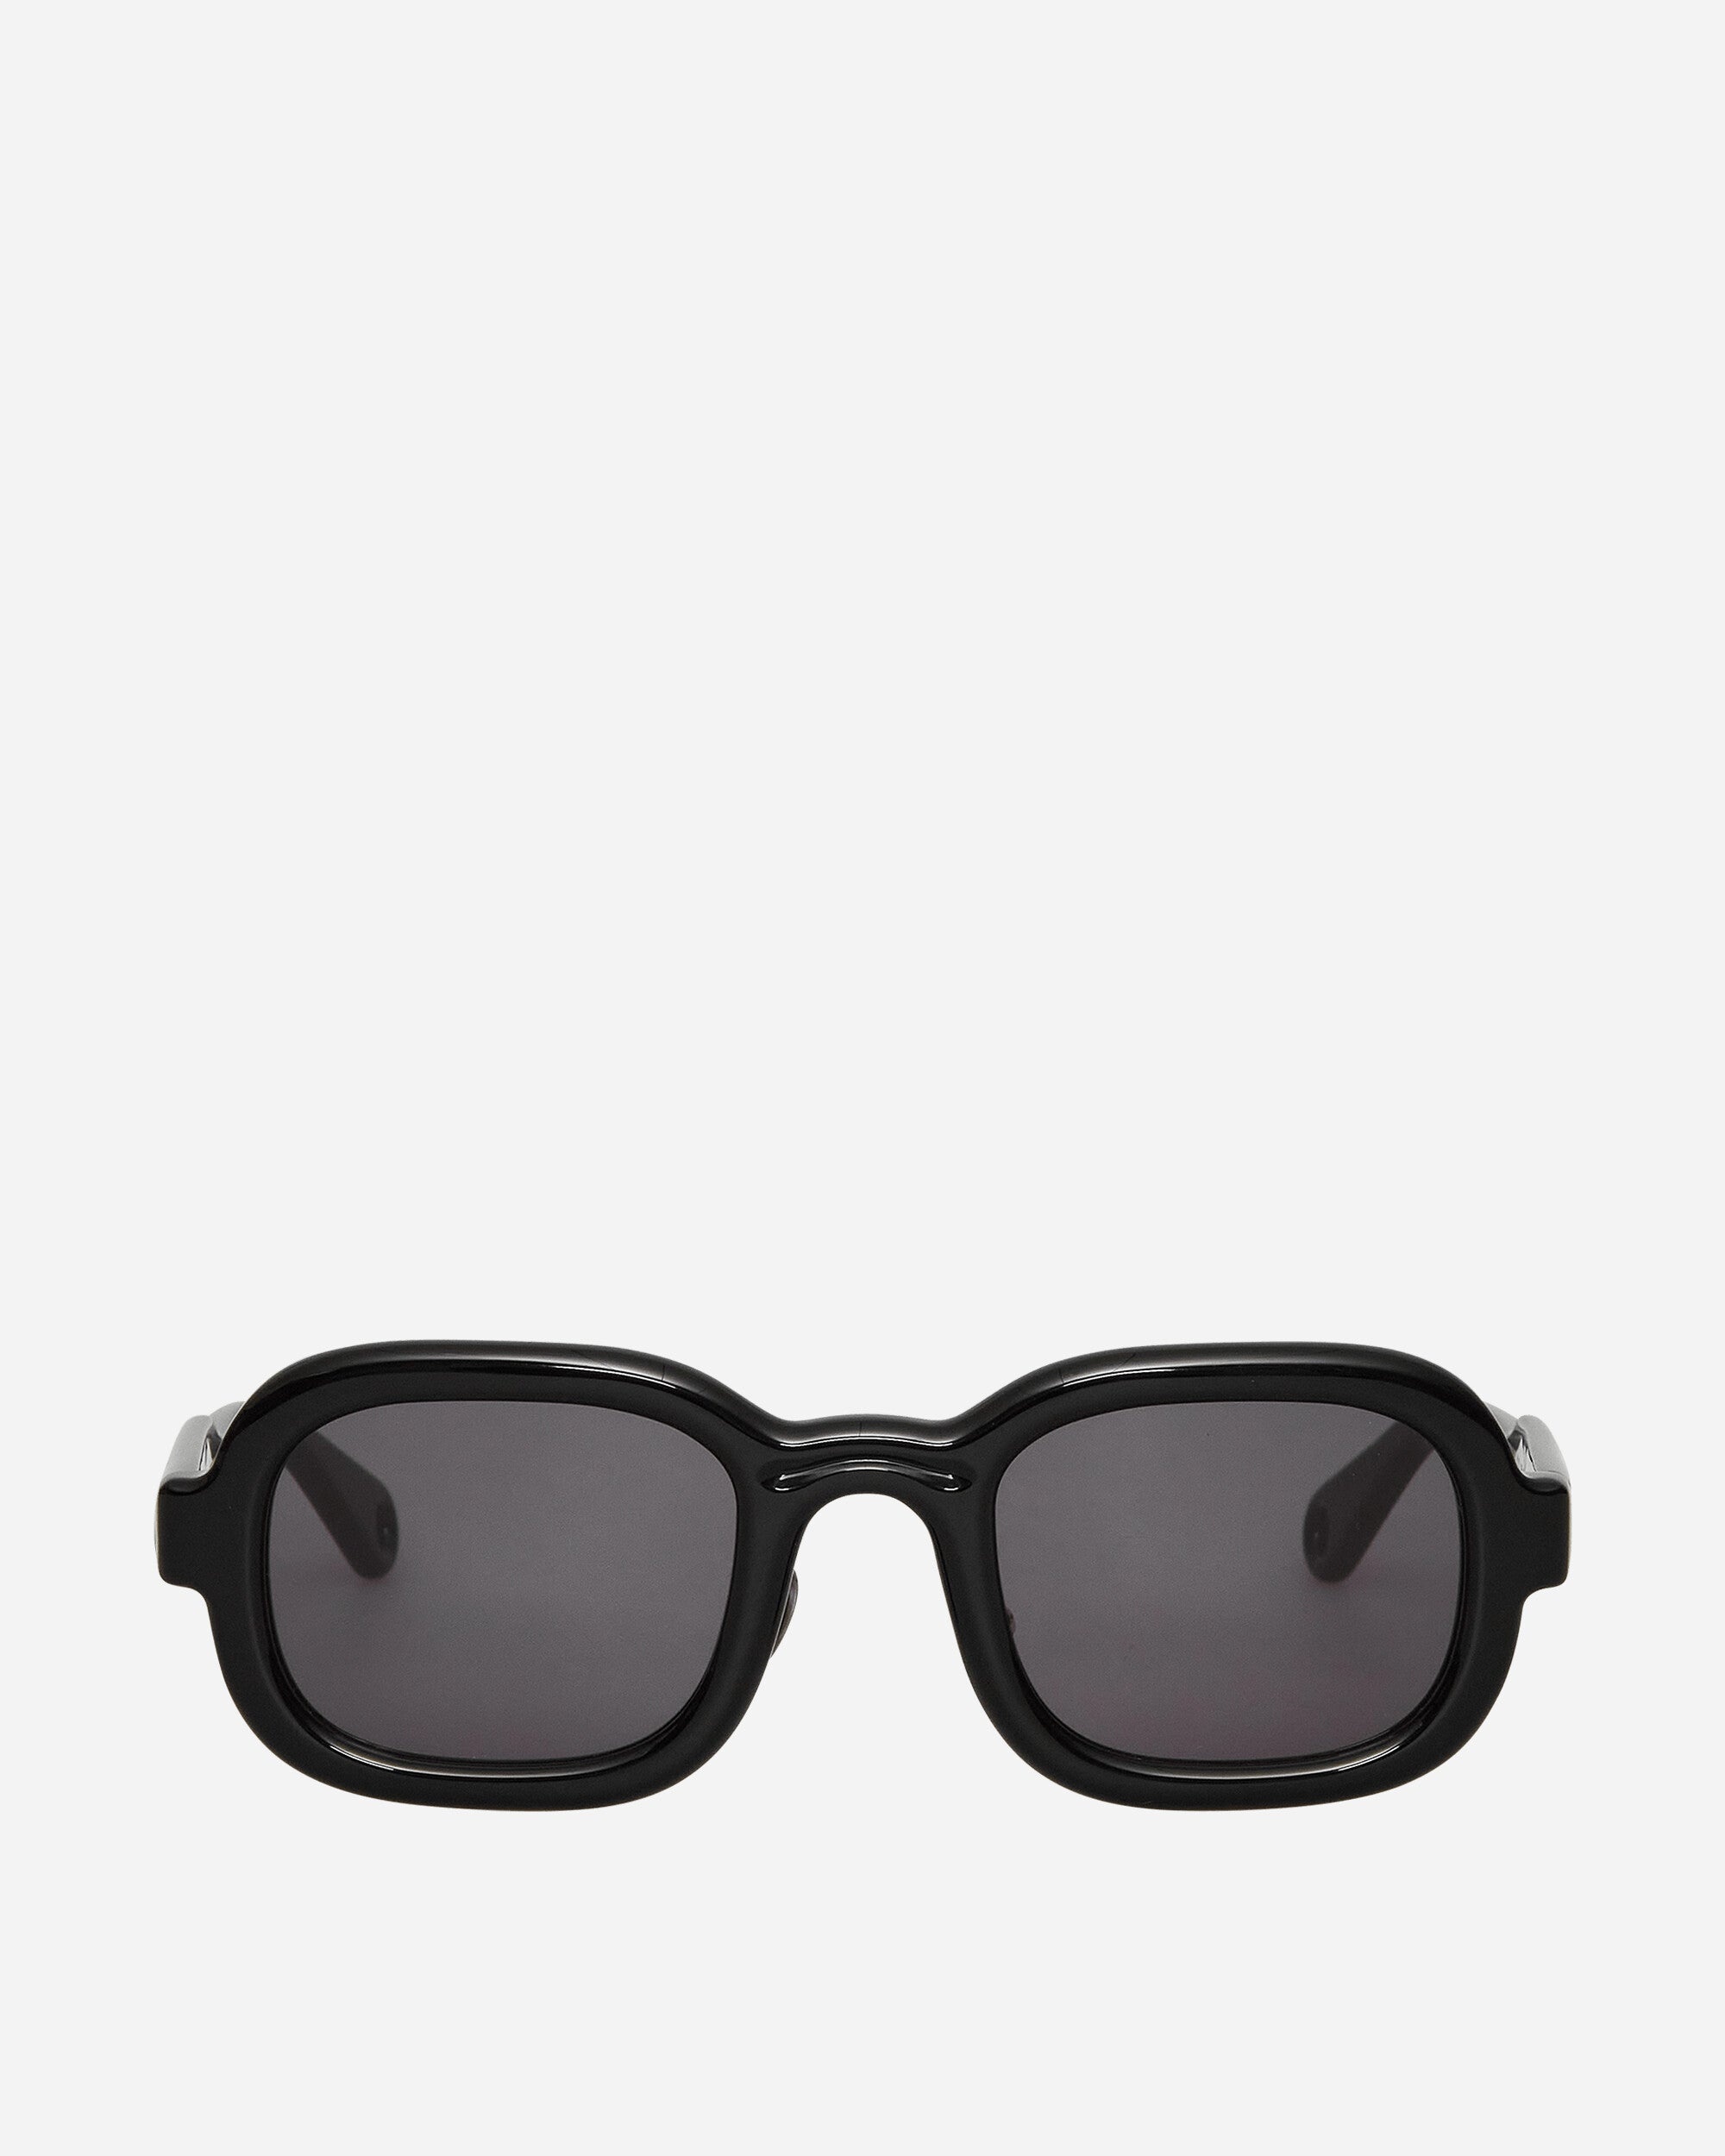 Newman Post Modern Primitive Eye Protection Sunglasses Black - 1